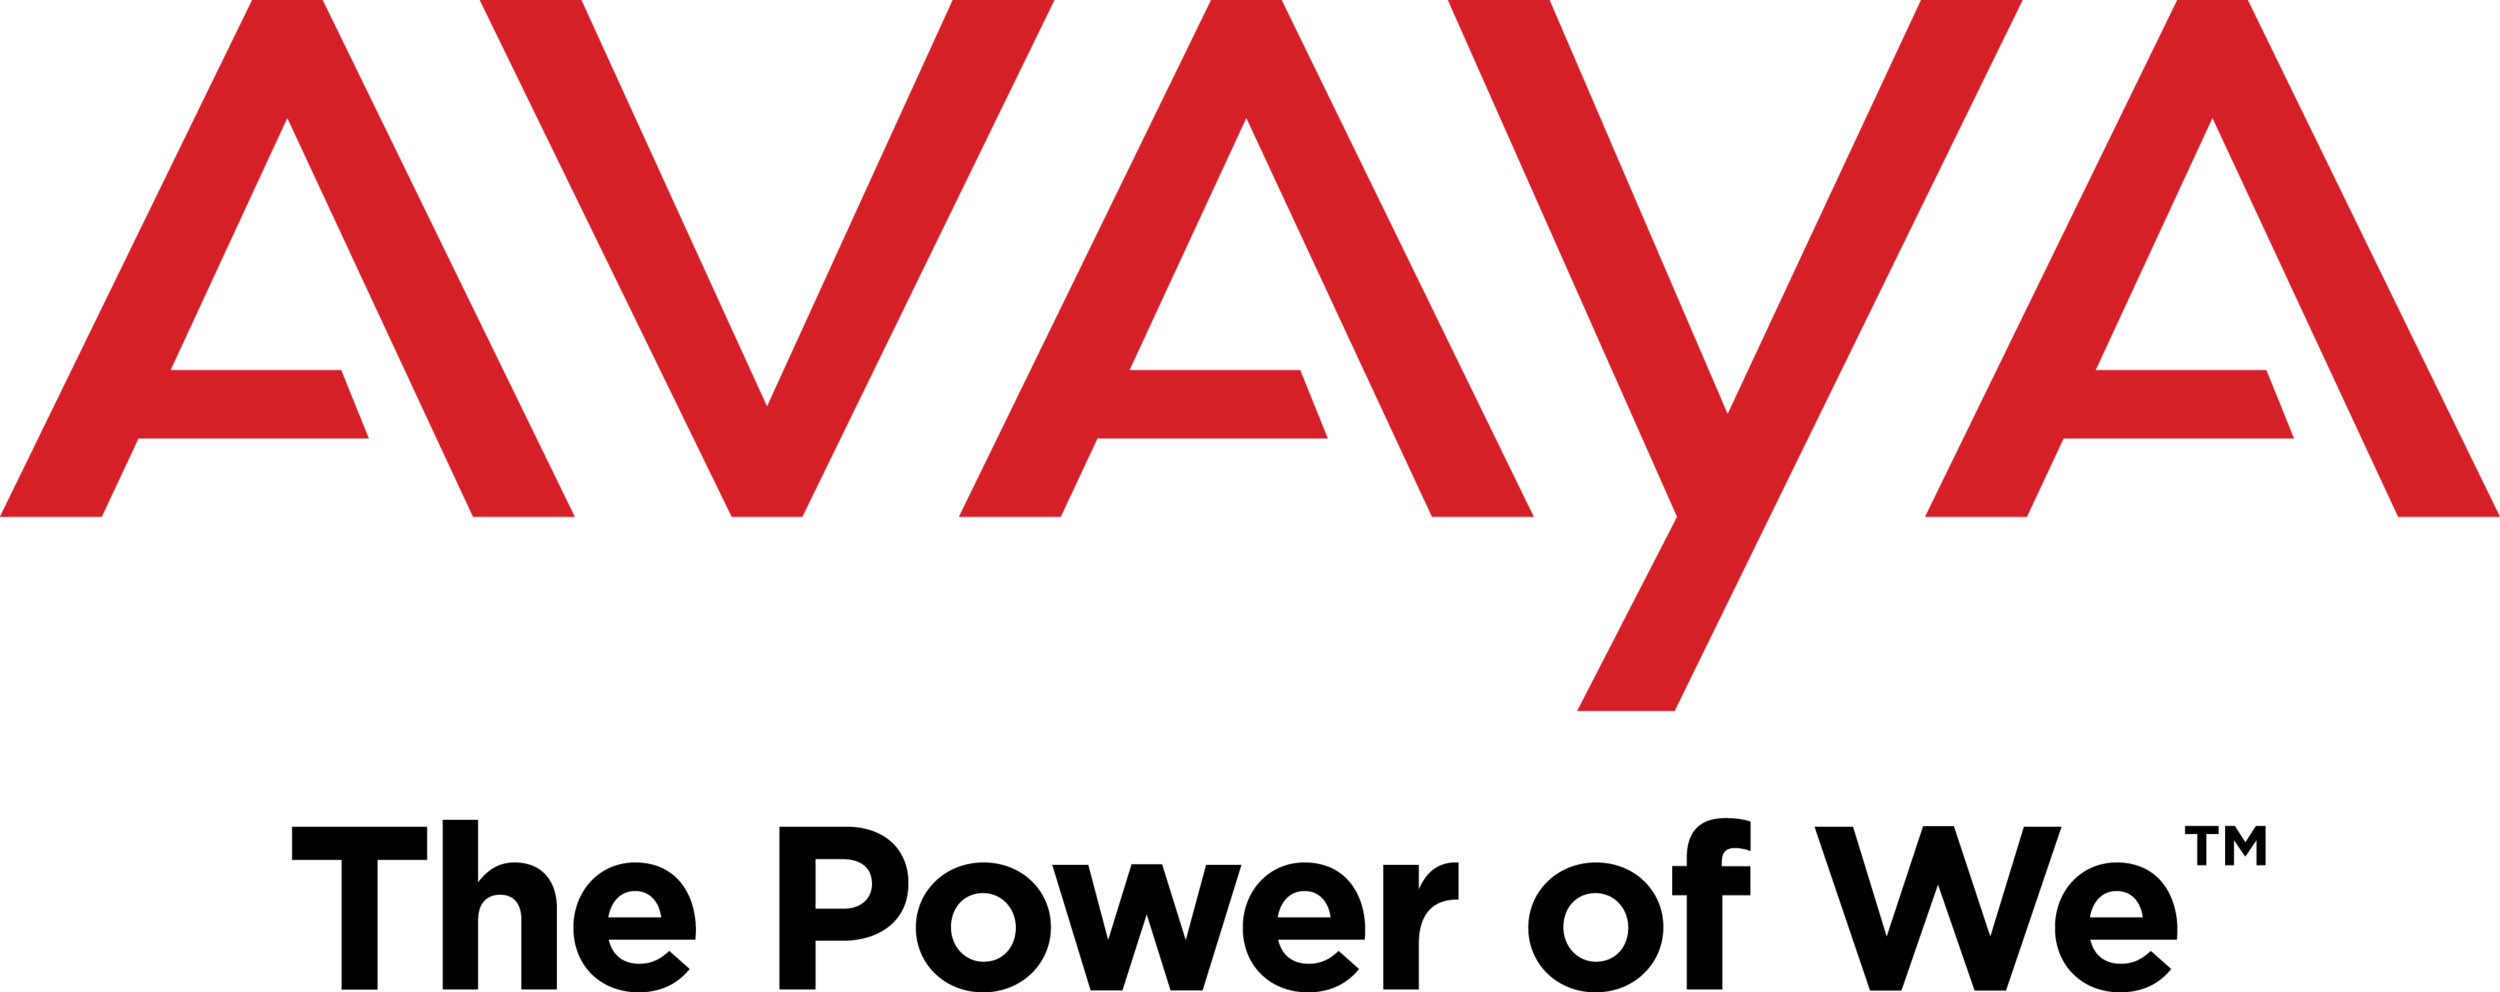 AvayaT-logo.png